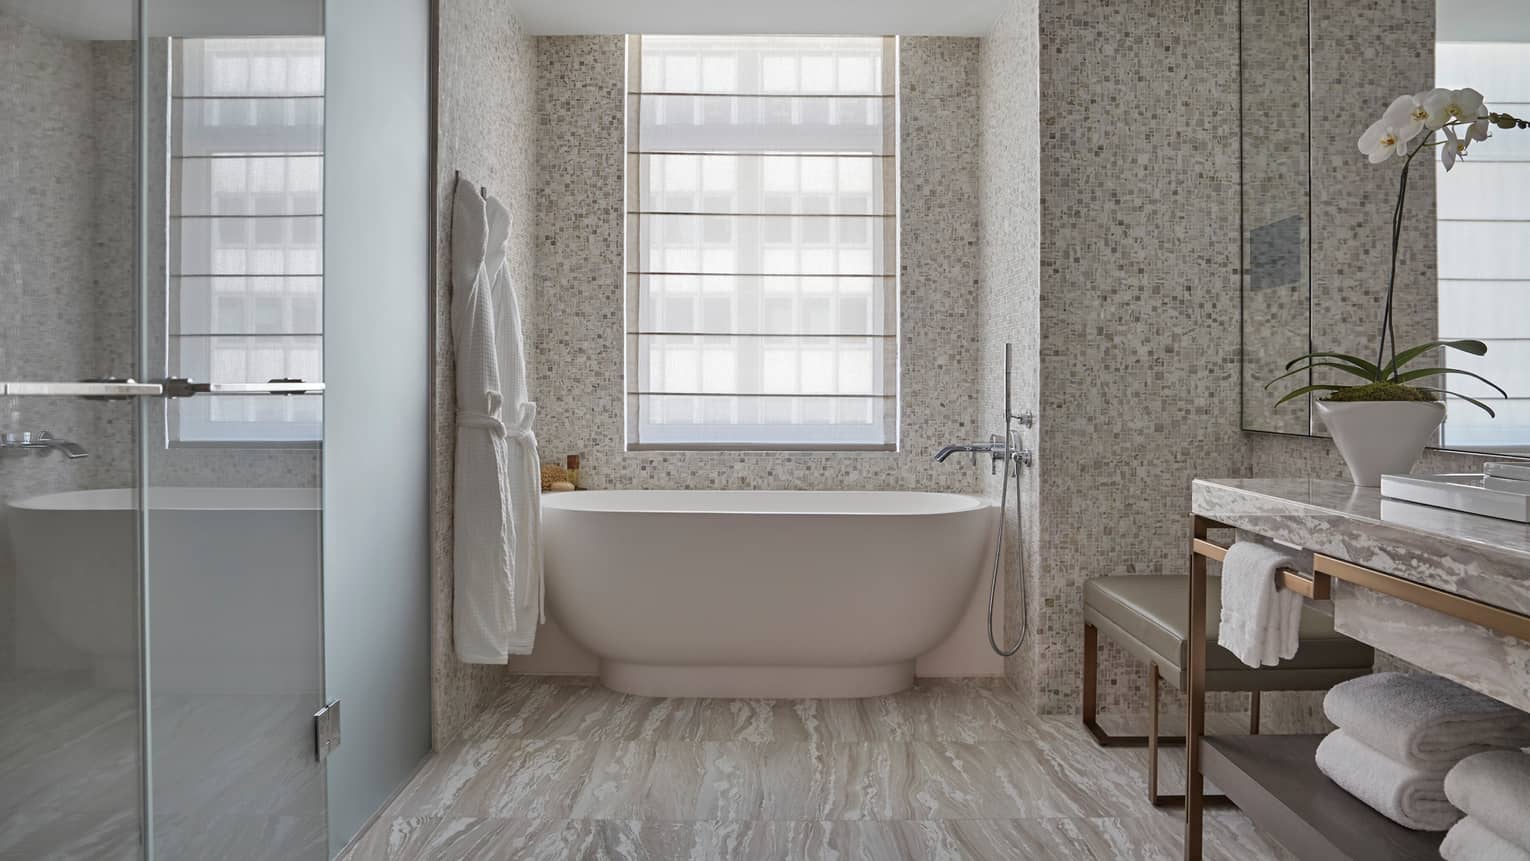 Corner Room bathroom with glass walk-in shower, white freestanding tub, vanity, white orchid